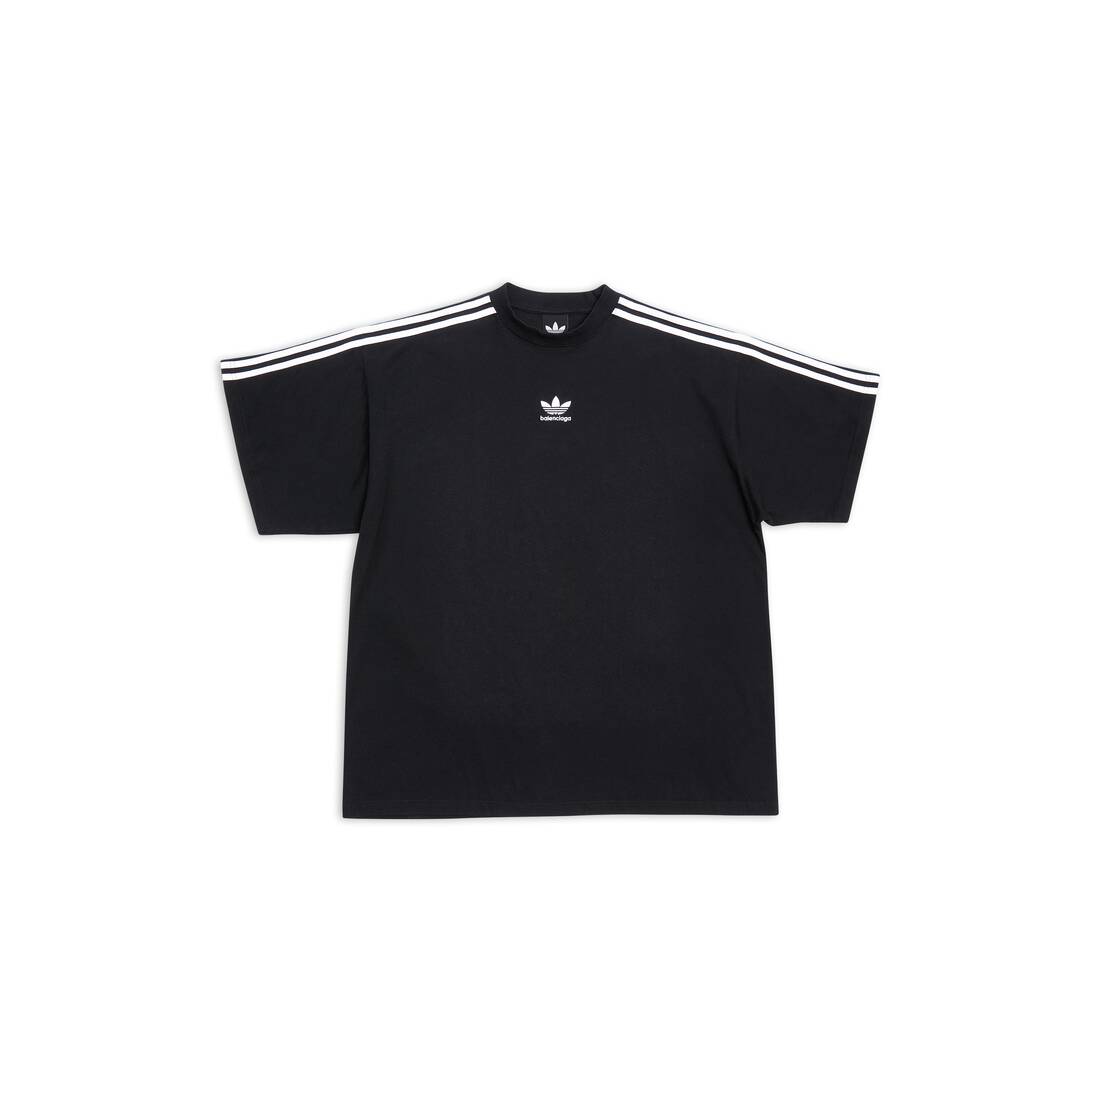 Balenciaga / Adidas T-shirt Oversized in Black | Balenciaga US